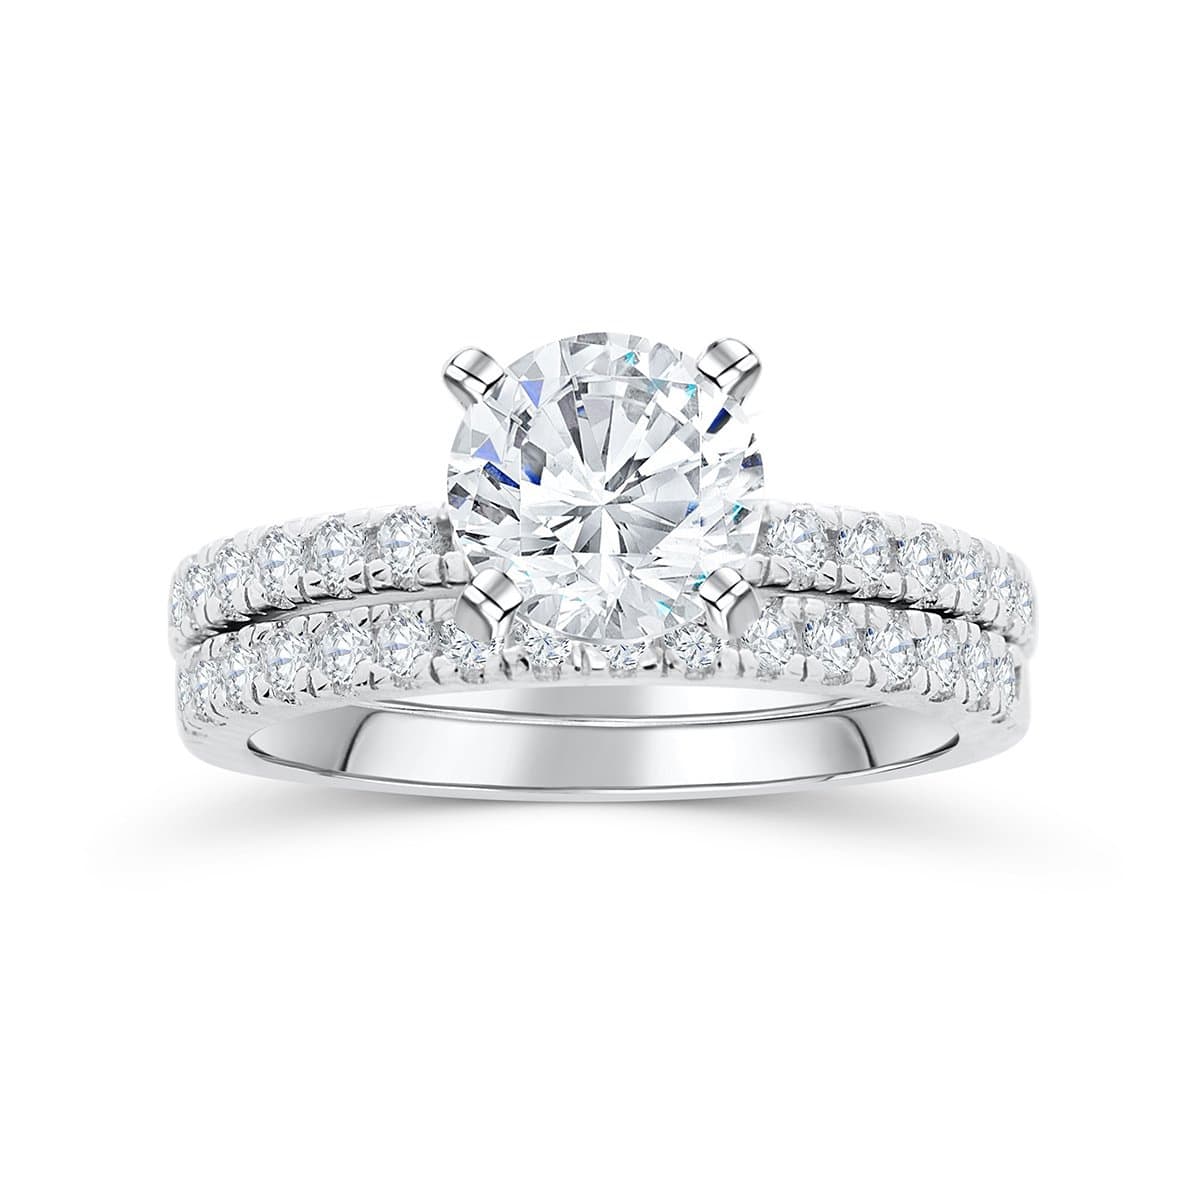 Solitaire Star Bridal Set Ring Star Cut Diamond Simulant